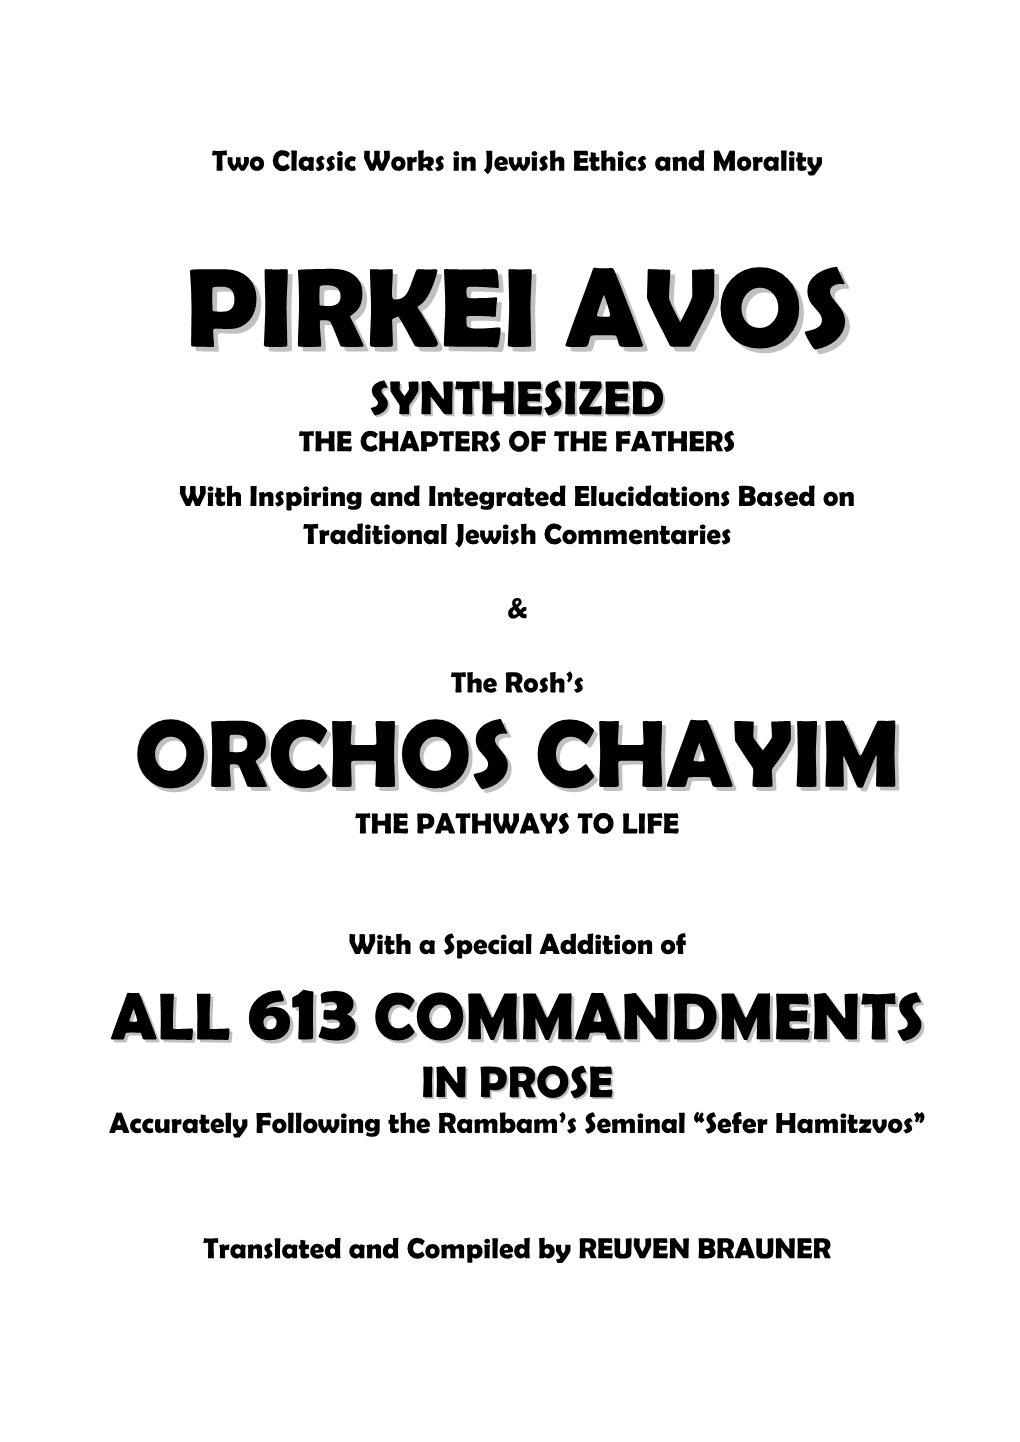 Pirkei Avos – Synthesized 1:1